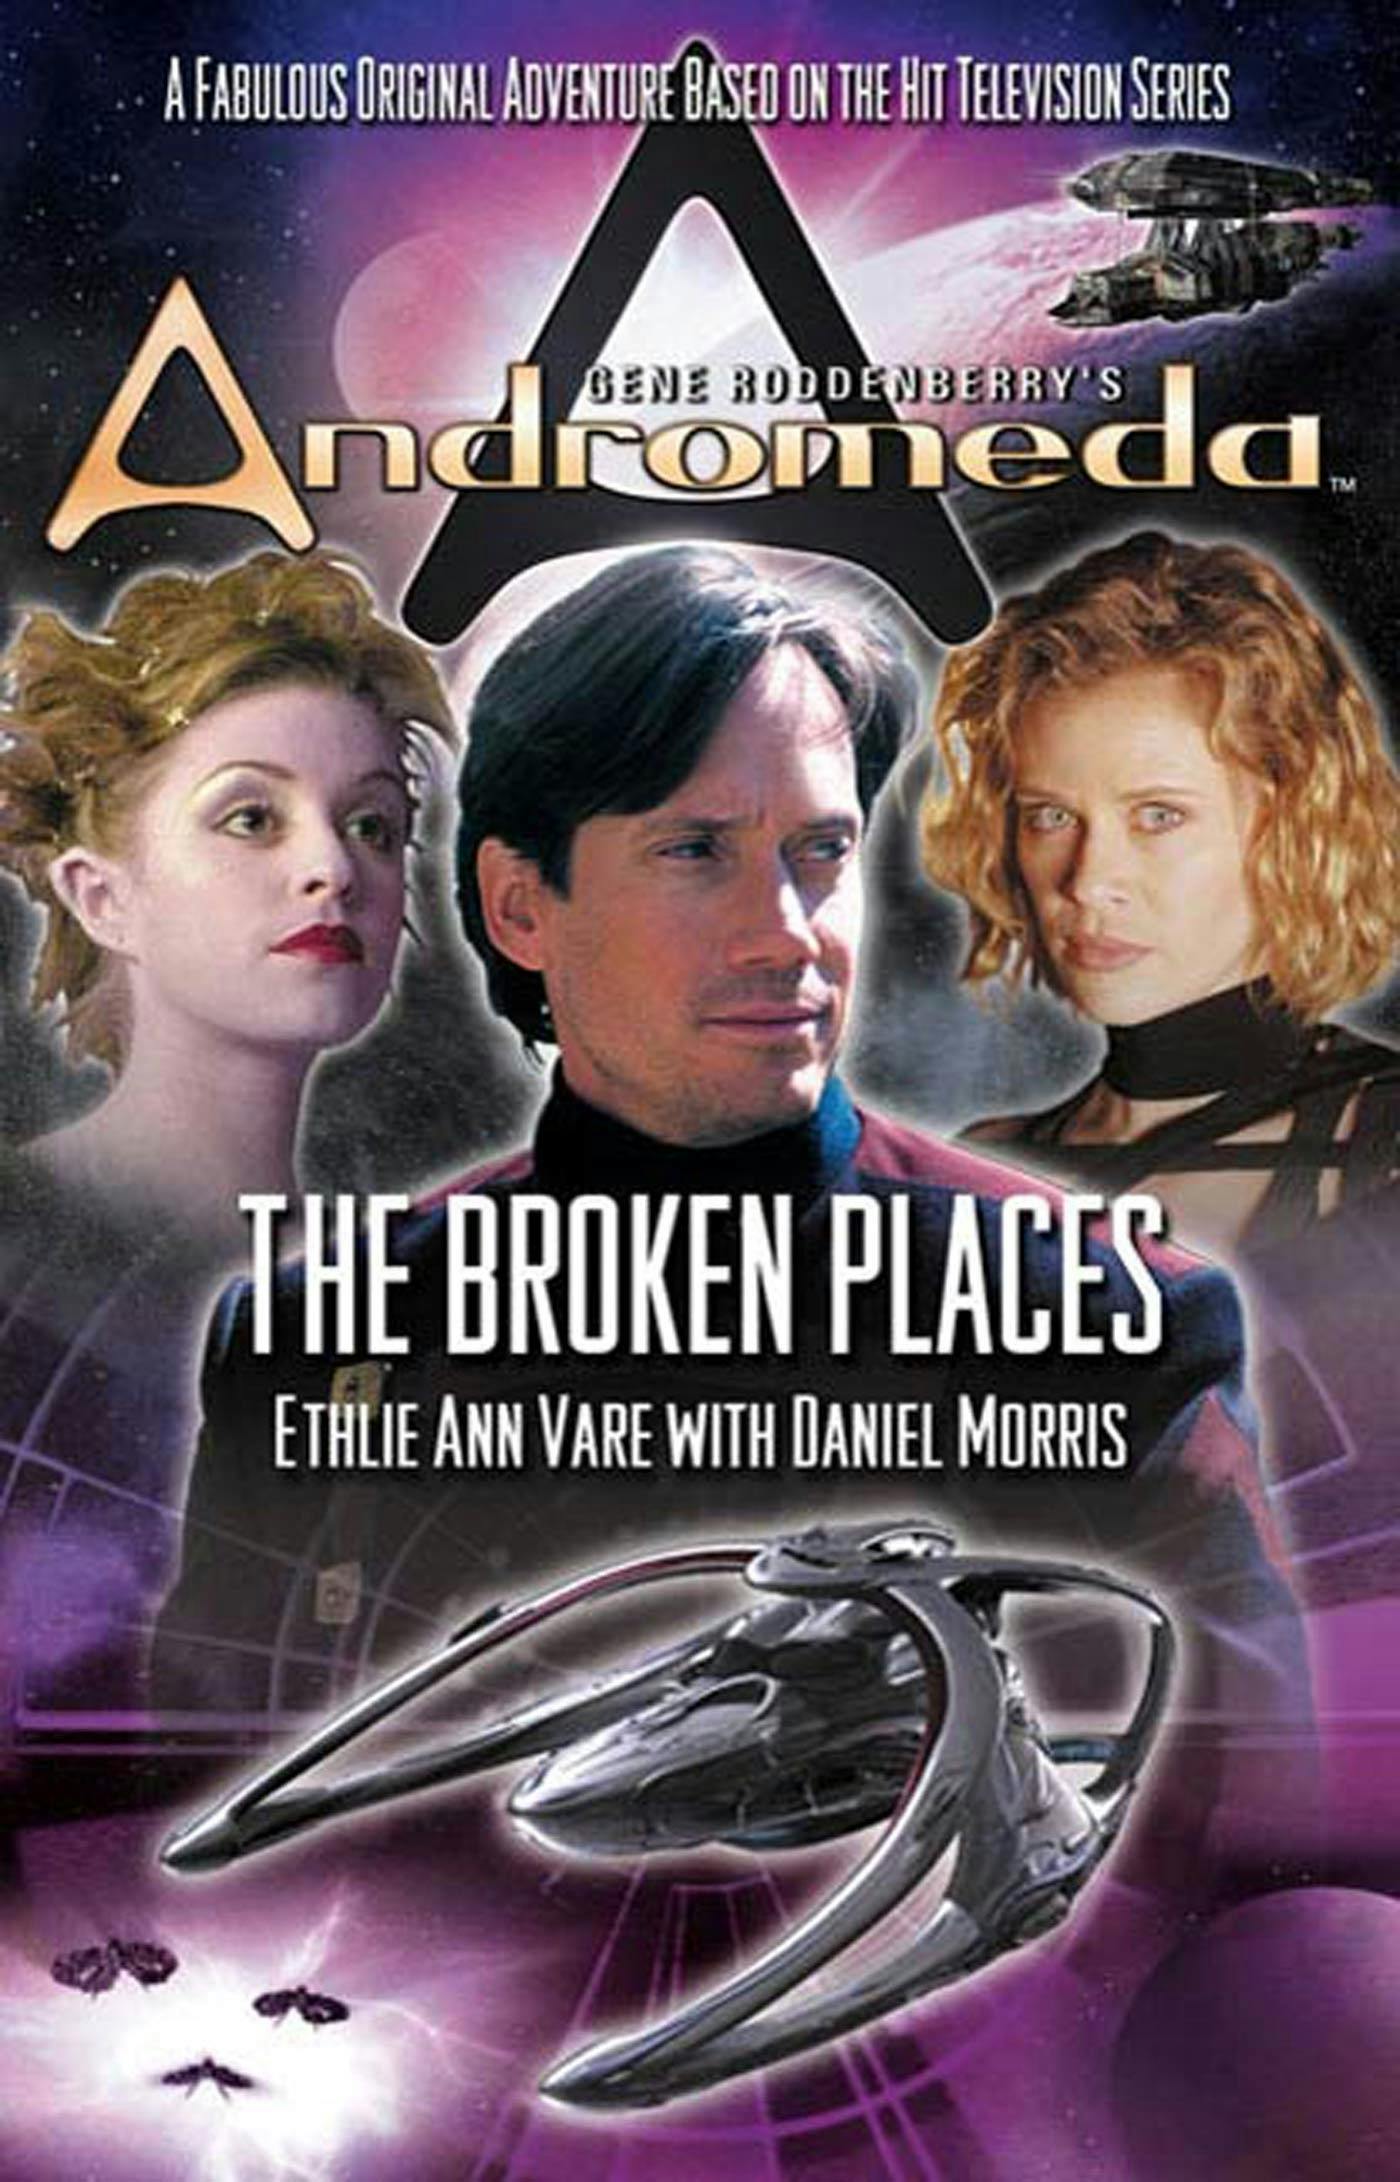 Gene Roddenberry's Andromeda: The Broken Places